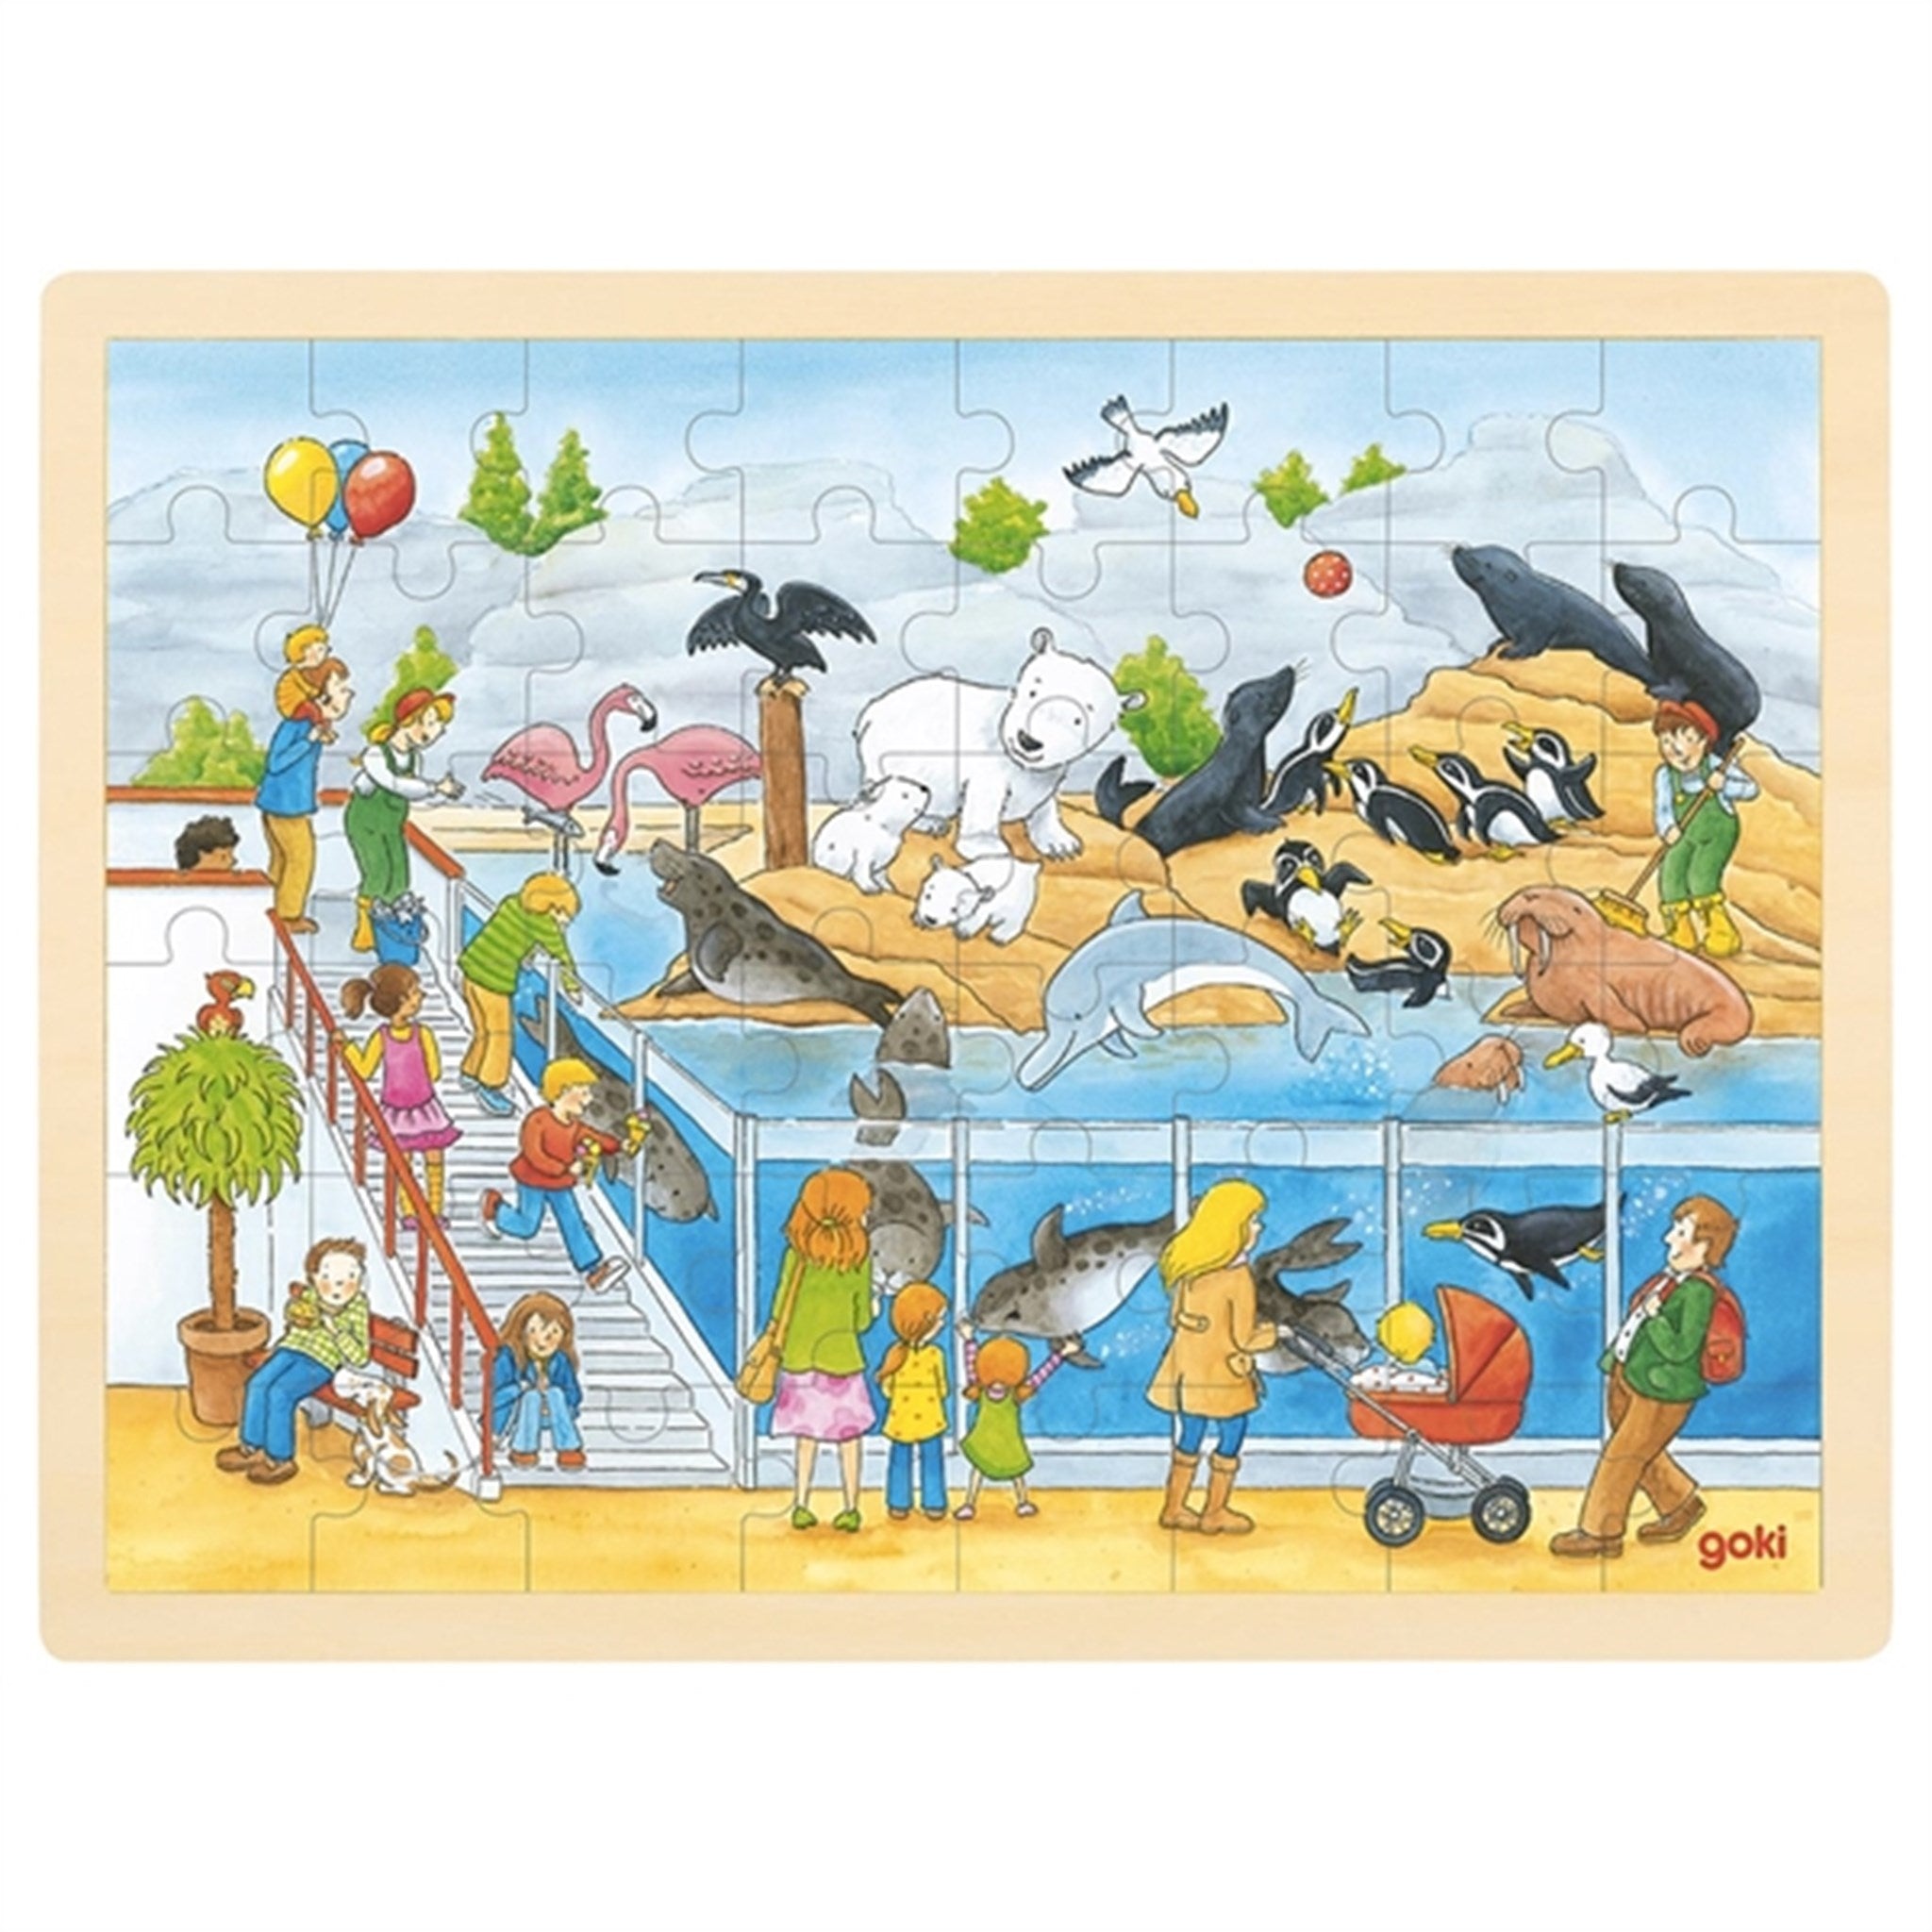 Goki Puzzle - Visit At The Zoo